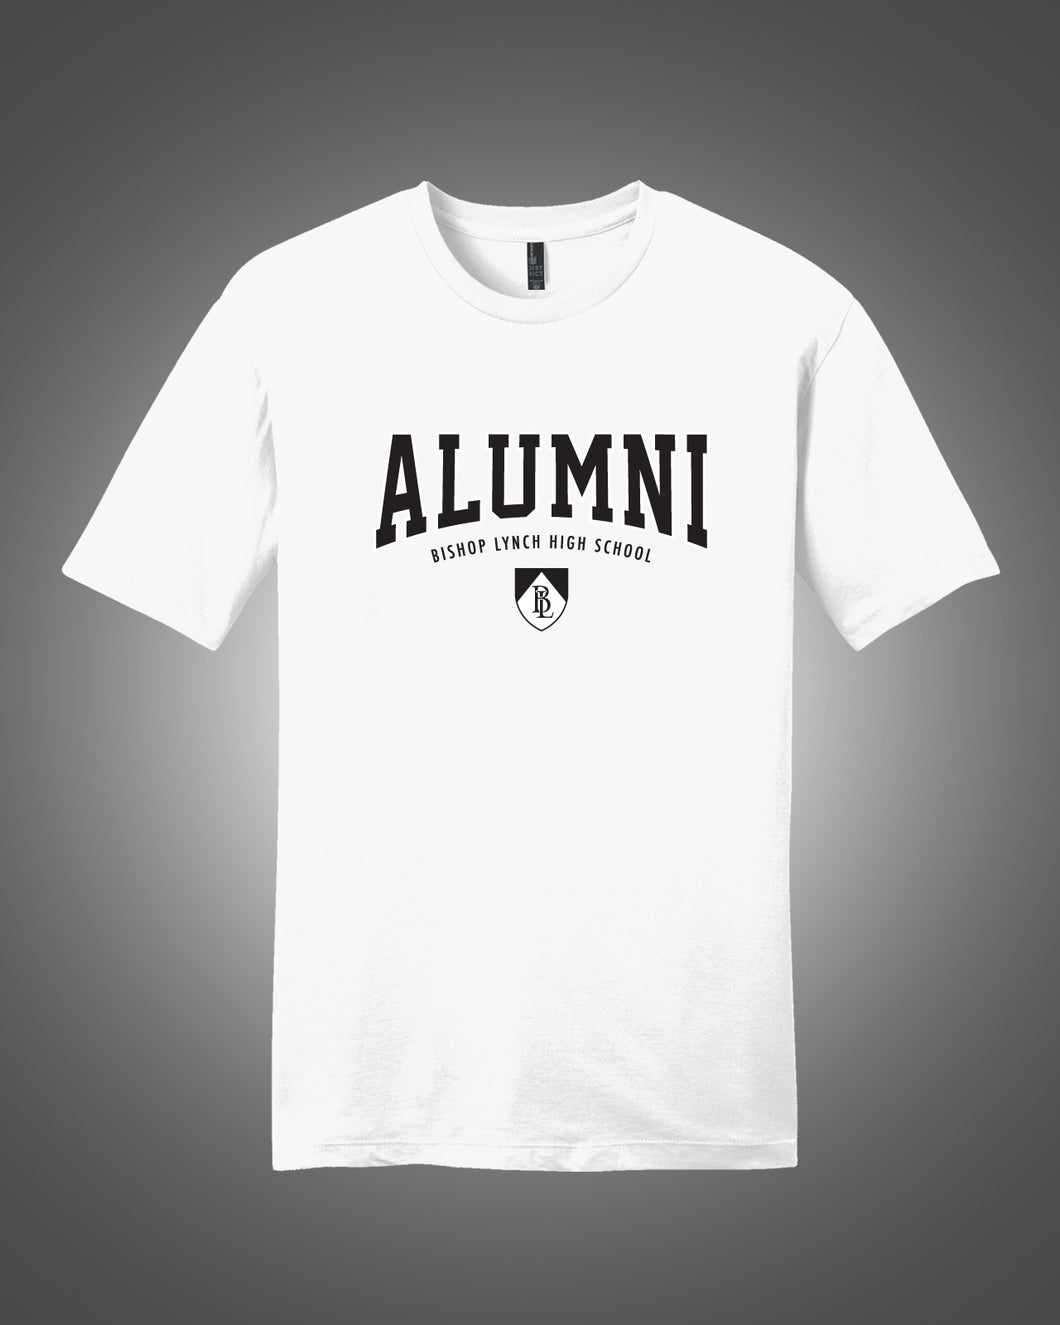 Alumni - Short Sleeve Tee - Option #2 - White